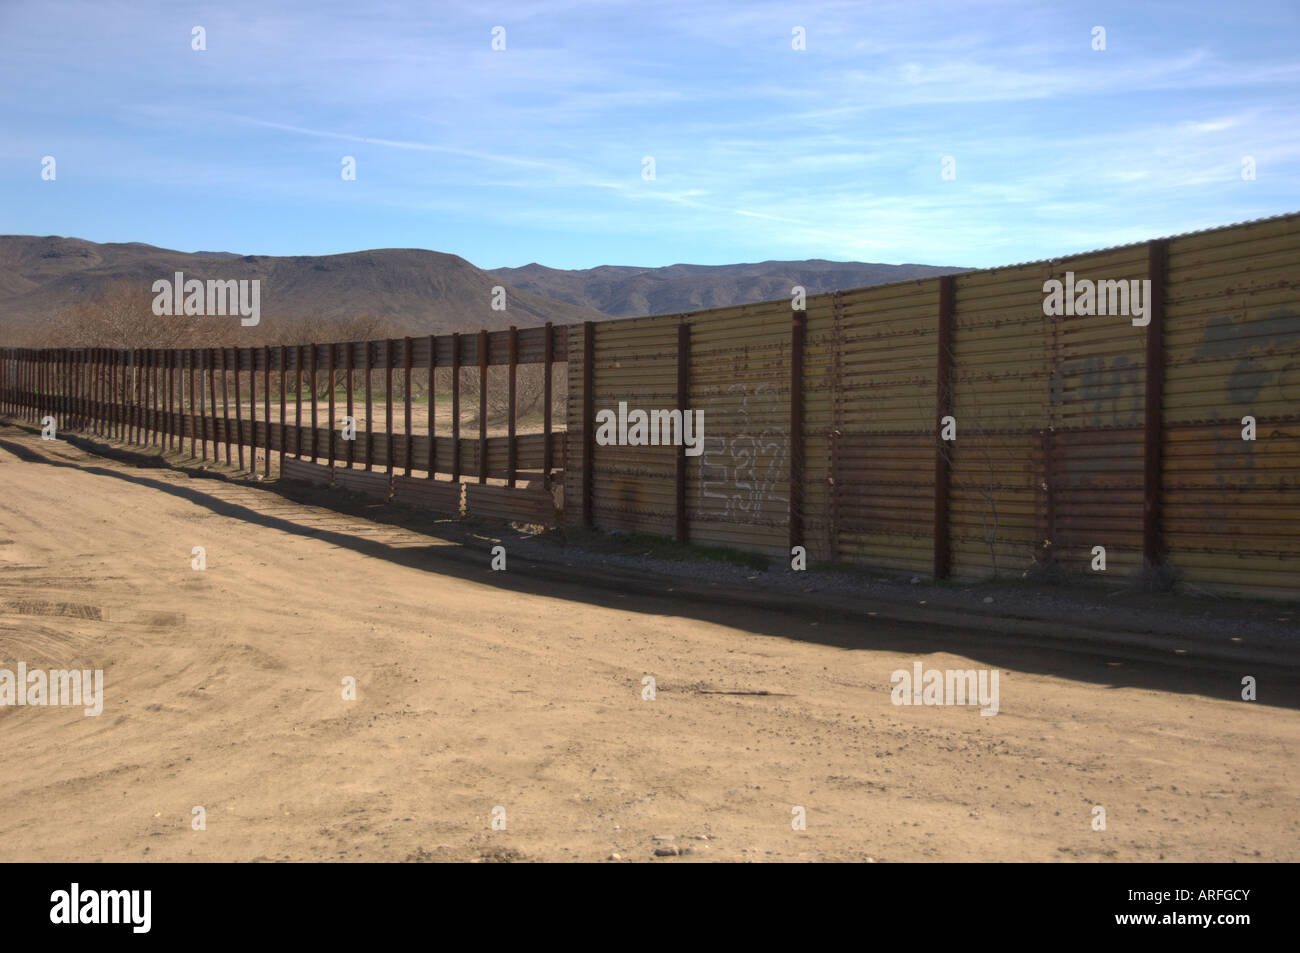 mexico-border-fence-with-holes-at-jacumba-california-ARFGCY.jpg